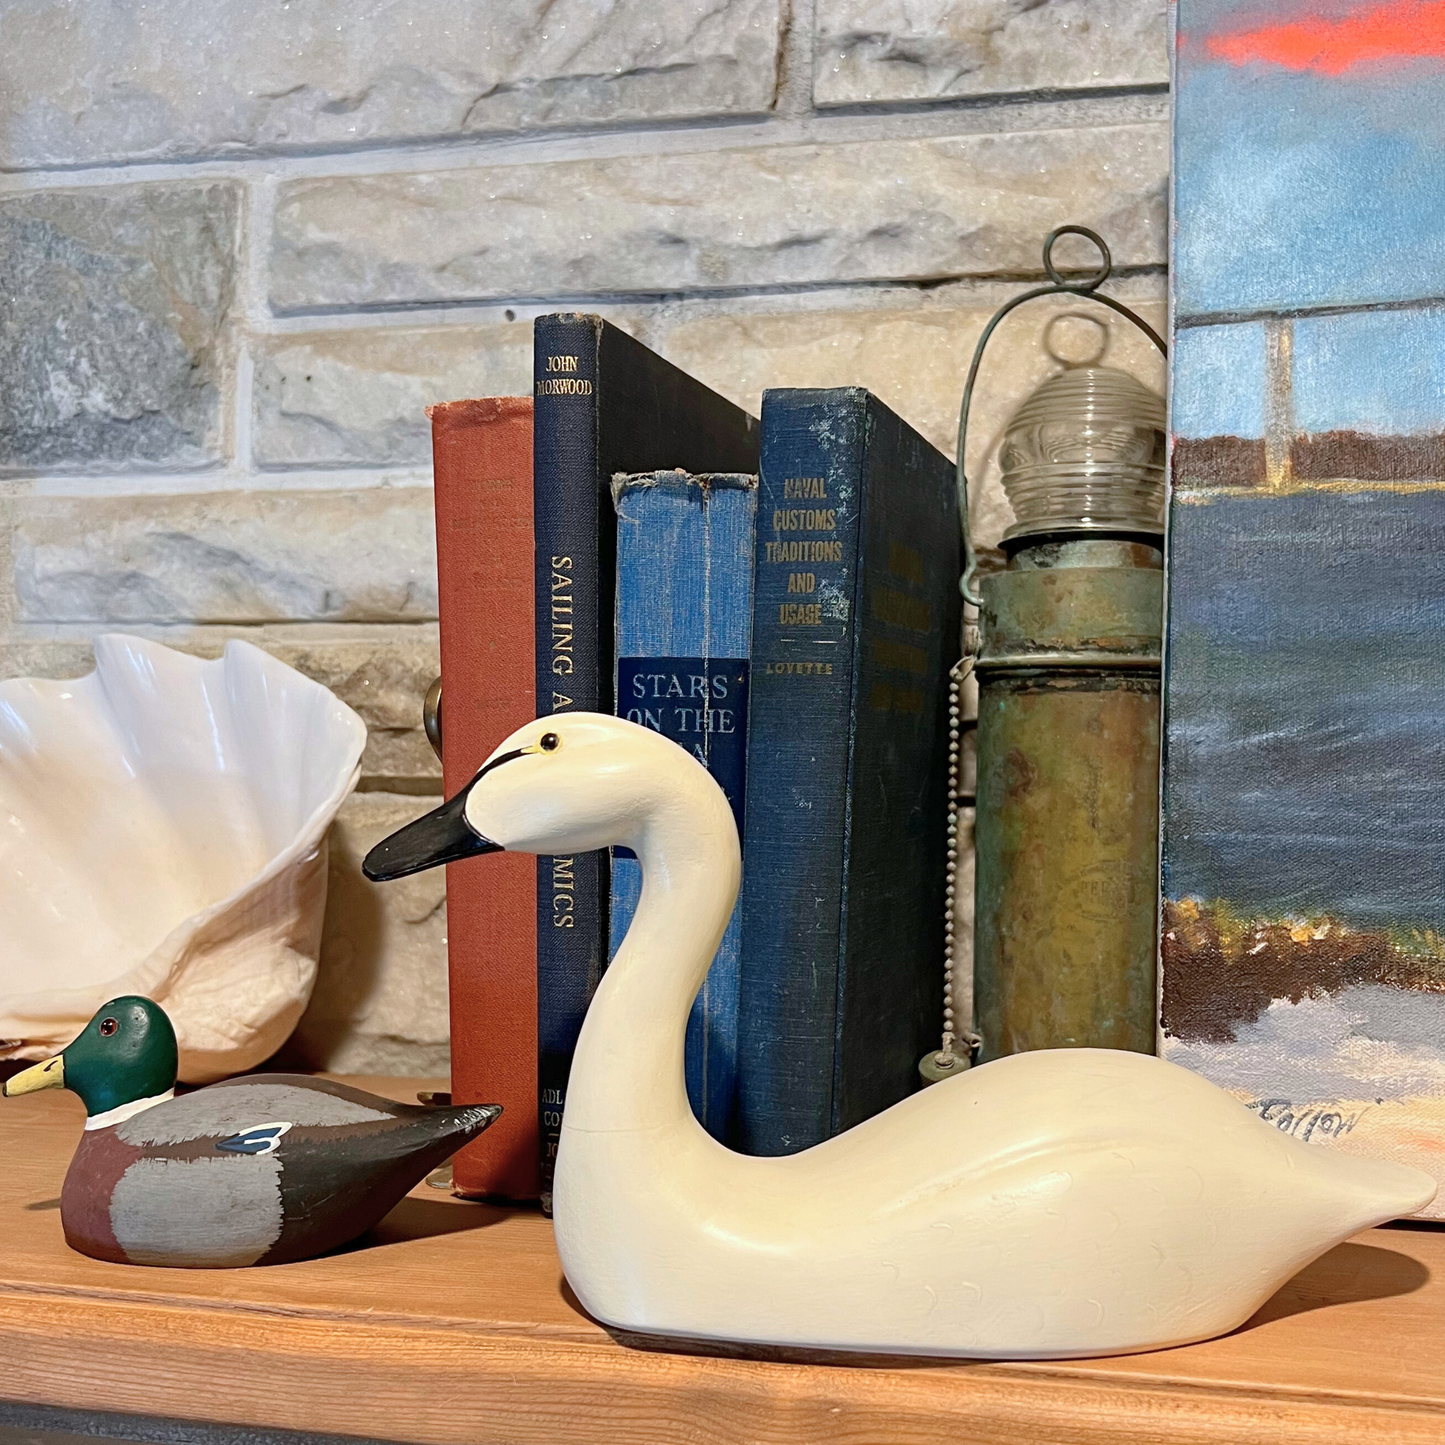 1998 handmade swan decoy